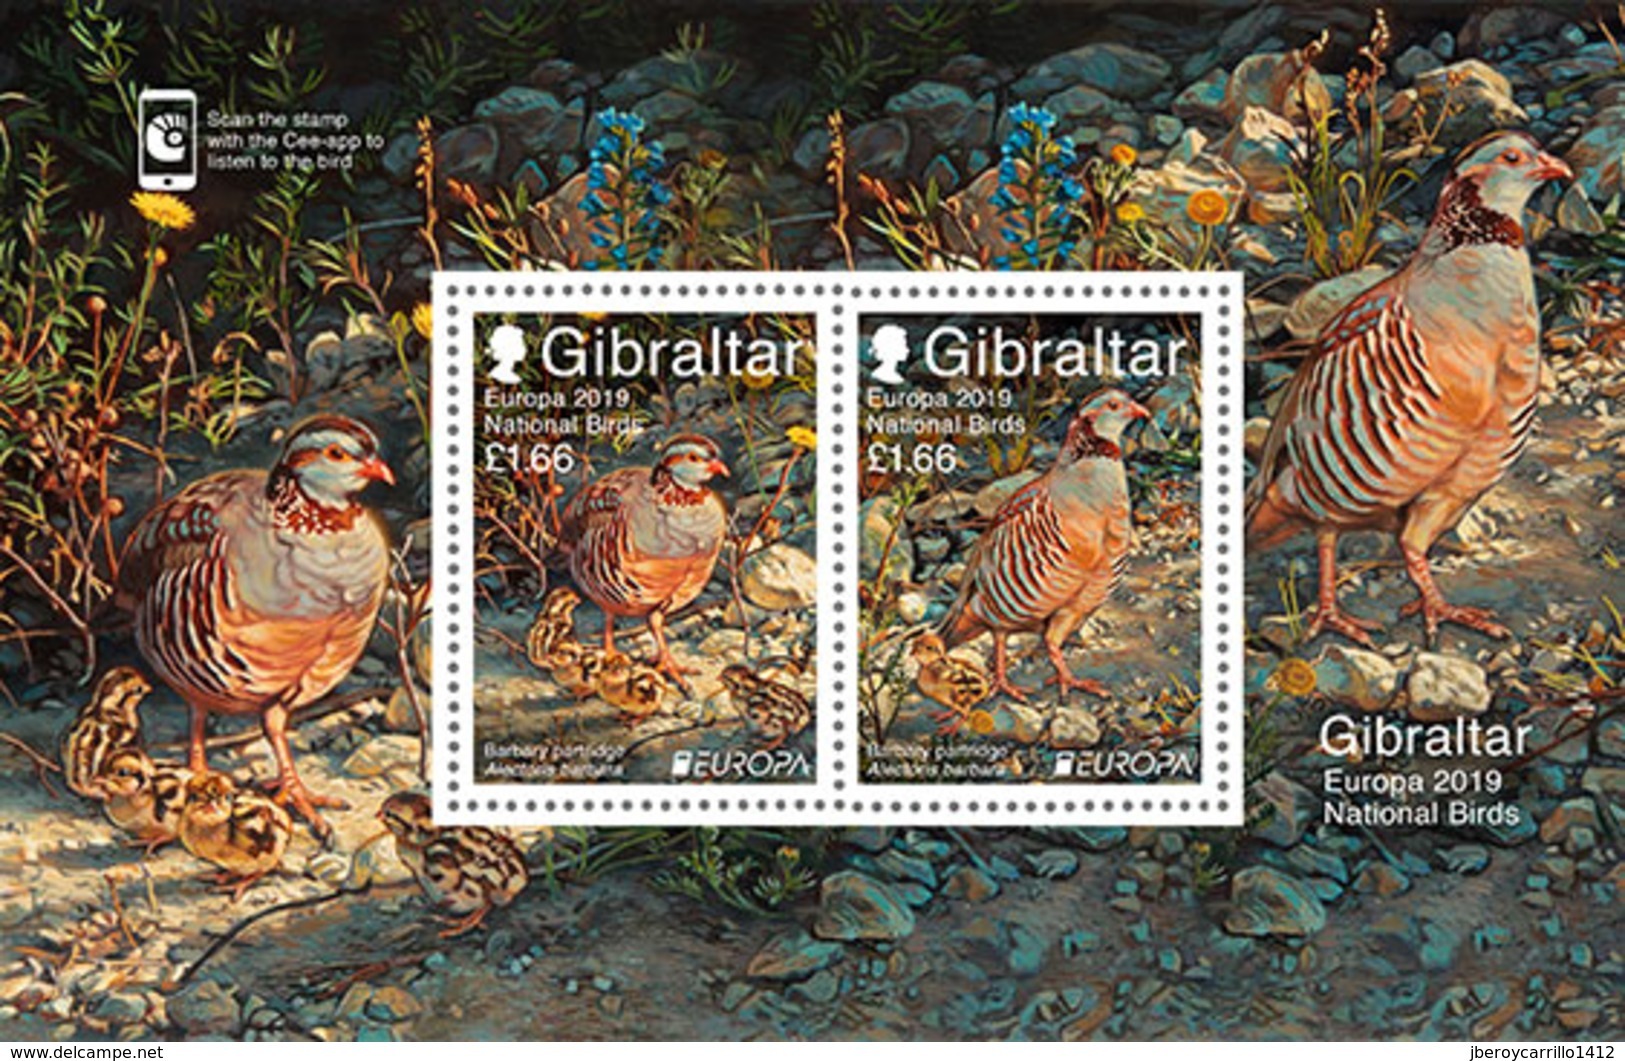 GIBRALTAR 2019 - EUROPA 2019 - -"AVES - BIRDS/WILDLIFE - VÖGEL - OISEAUX"- BARBARY PARTRIDGE  - SOUVENIR SHEET - Gallinacées & Faisans